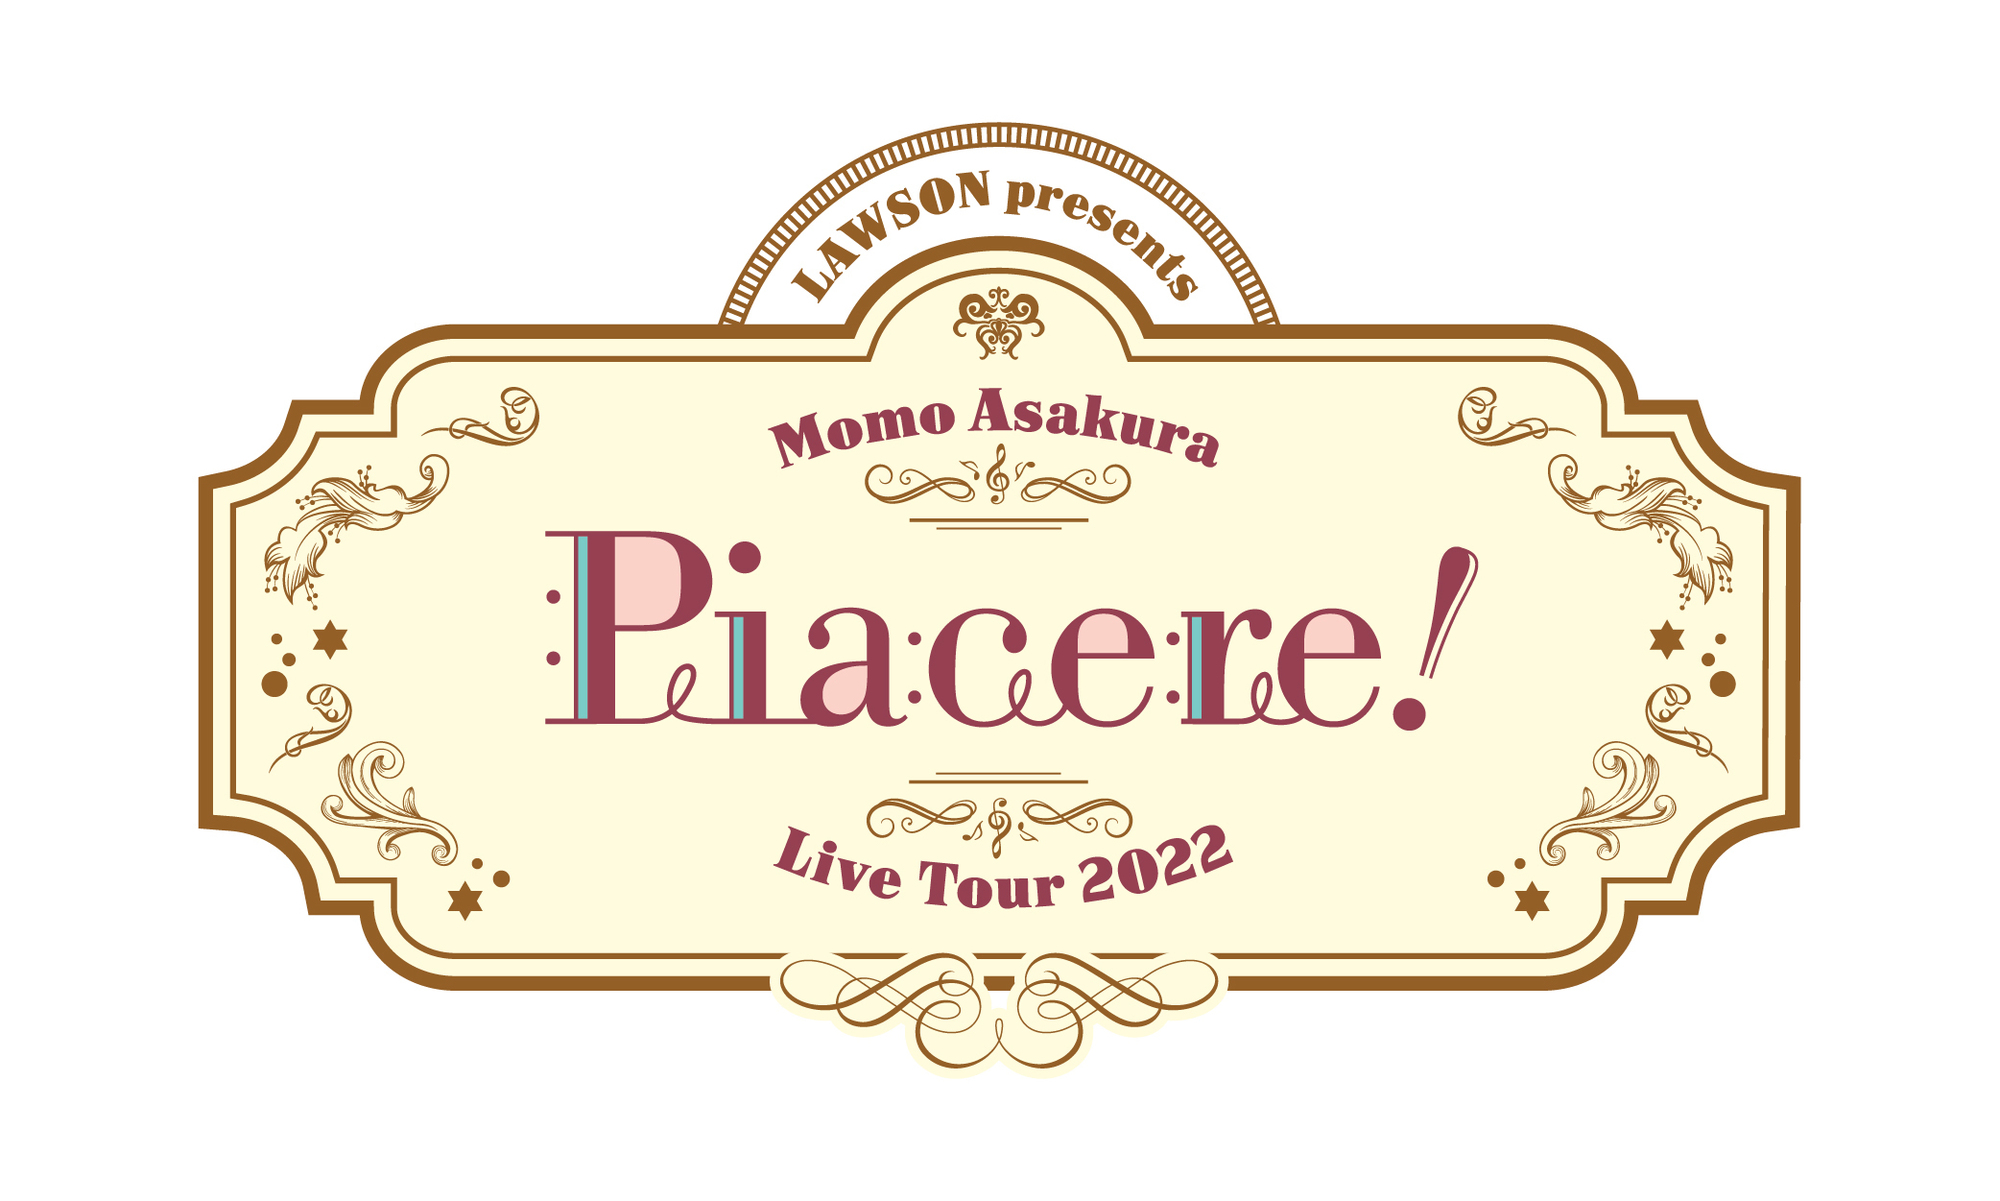 Lawson Presents 麻倉もも Live Tour 22 Piacere 一般発売のお知らせ Trysail Portal Square トライセイルポータルスクエア